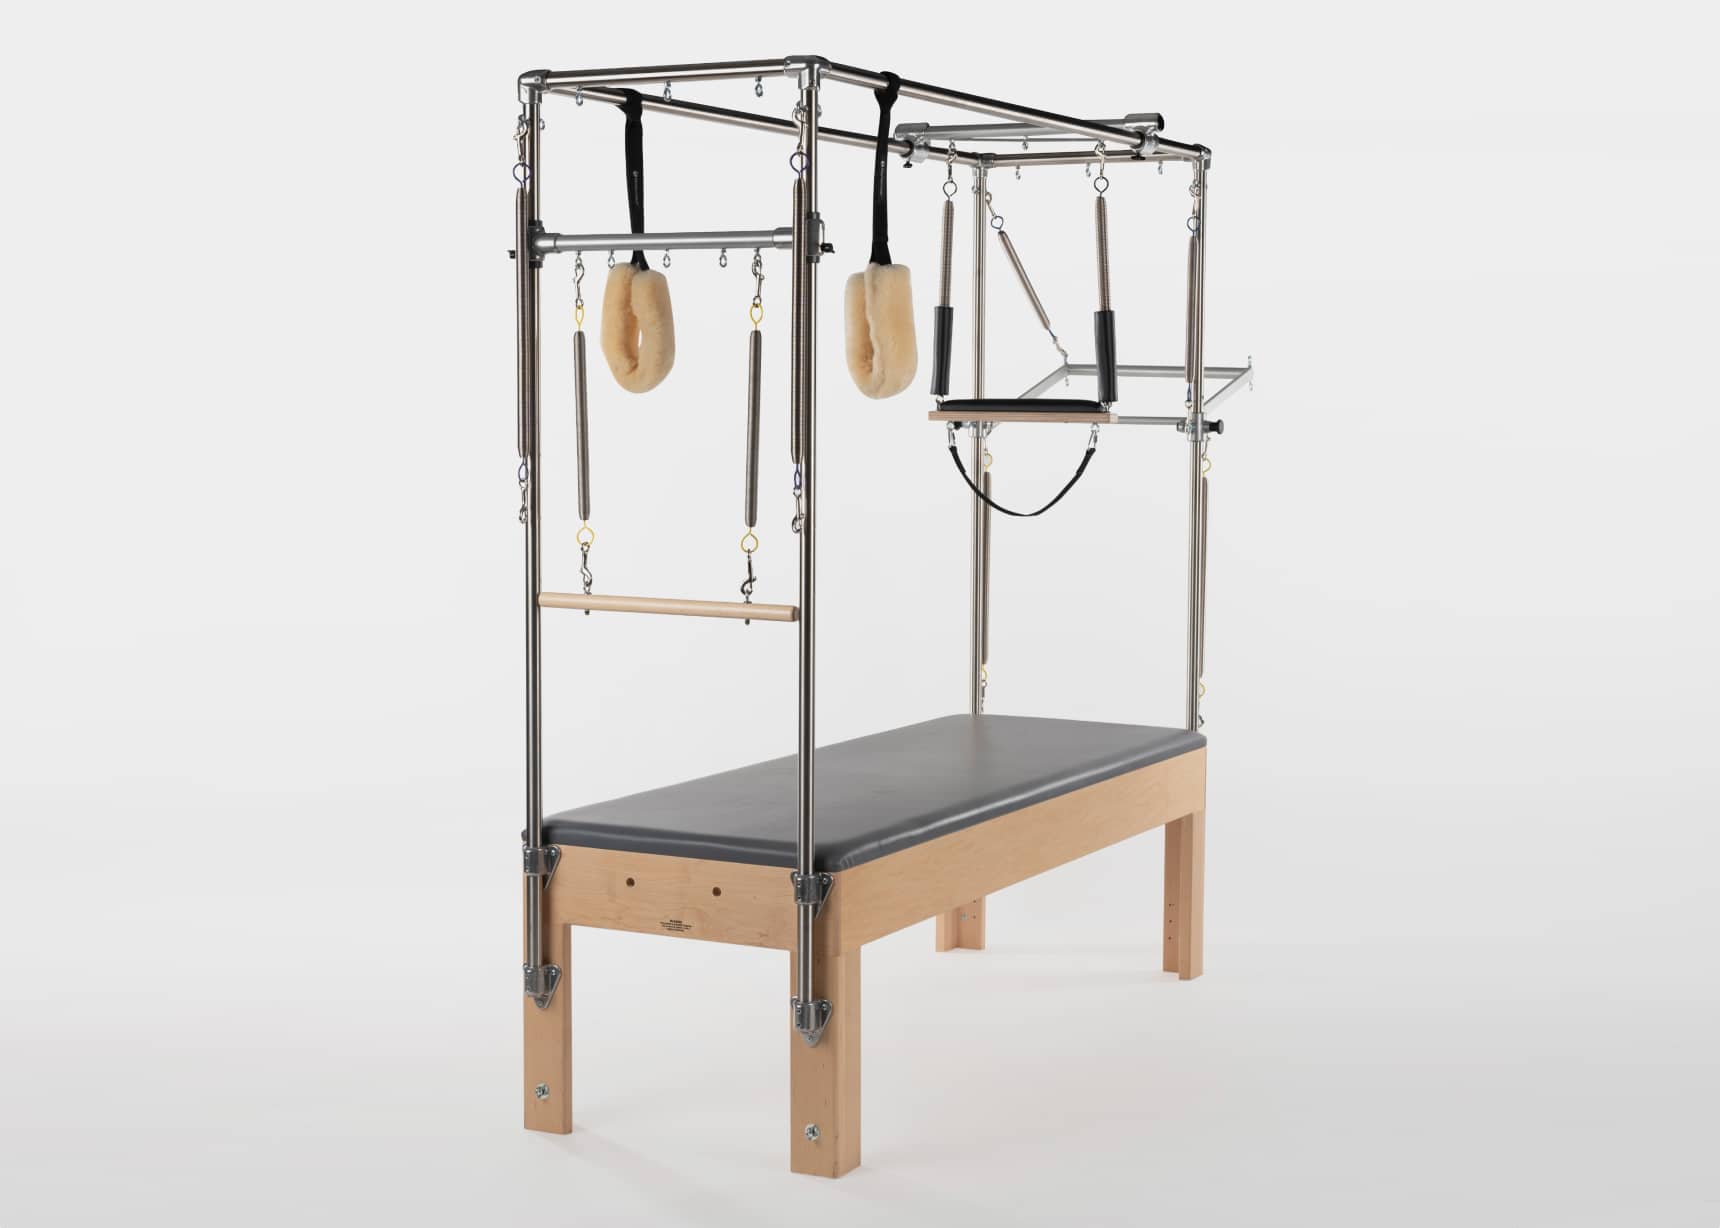 Trapeze Table - Cadillac product photo, Balanced Body